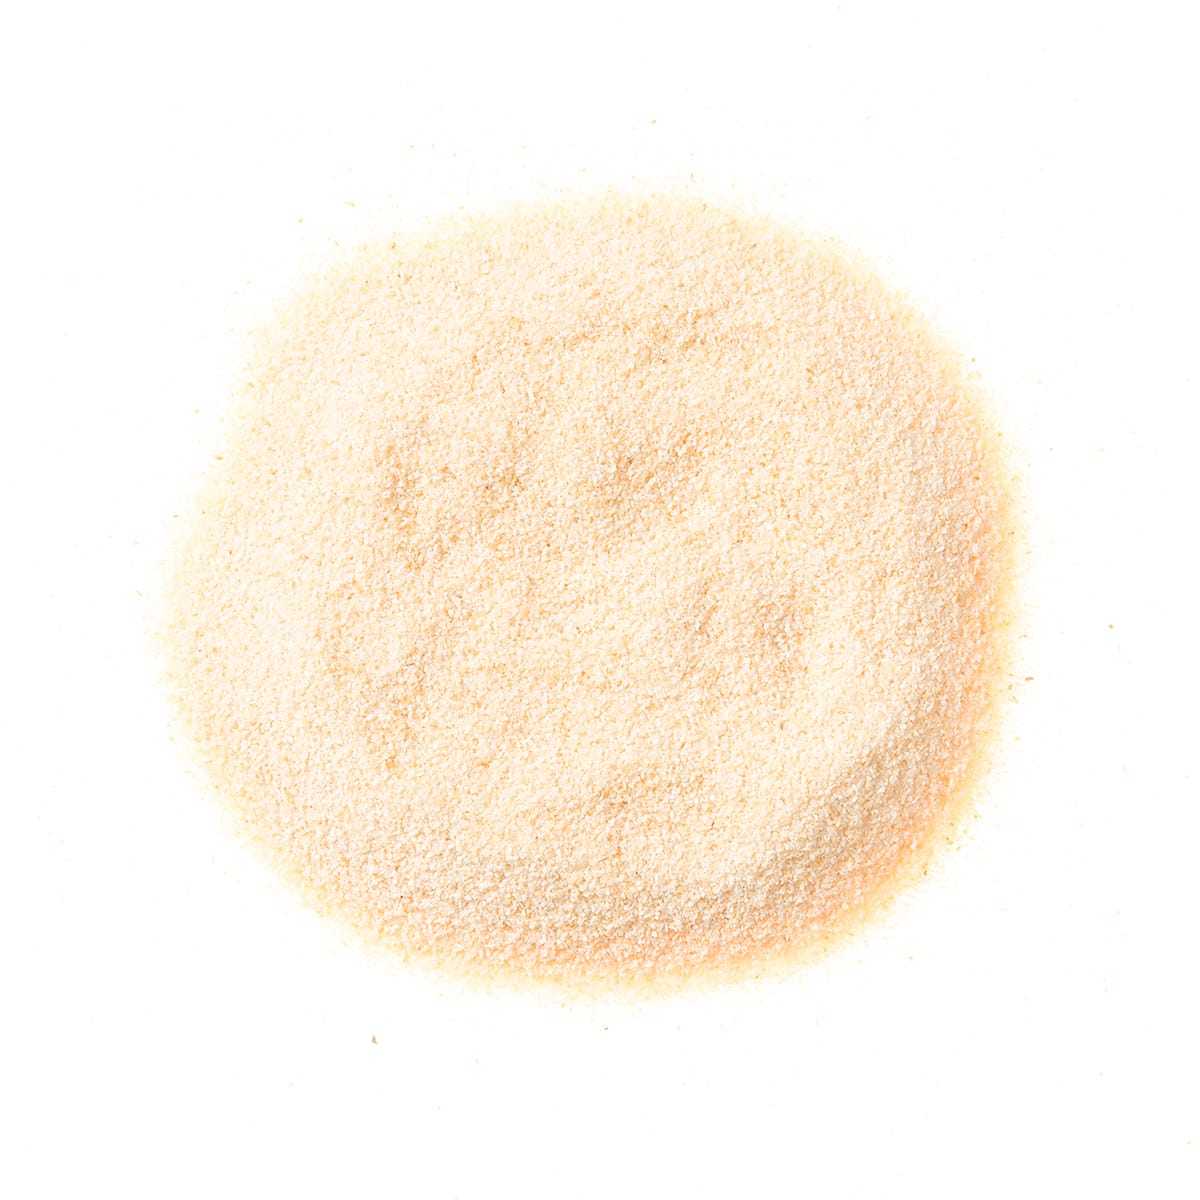 Garlic Powder | Dried Ground Garlic | Food Seasoning Mix